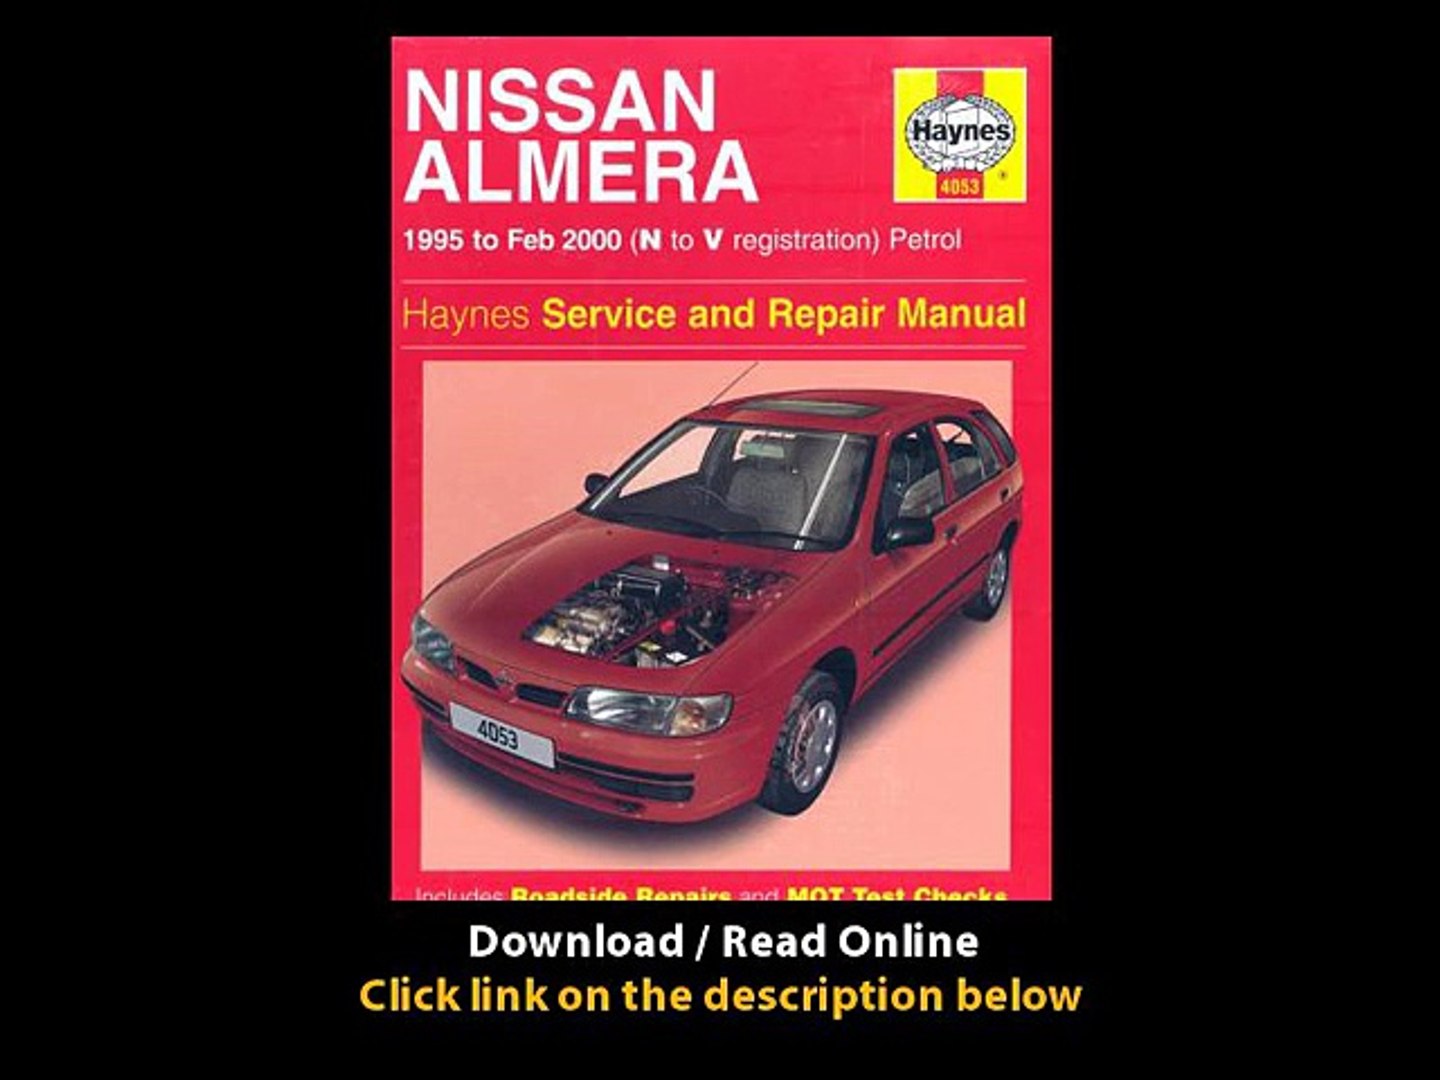 Download Pdf Nissan Almera Service And Repair Manual N To V Reg - Video Dailymotion